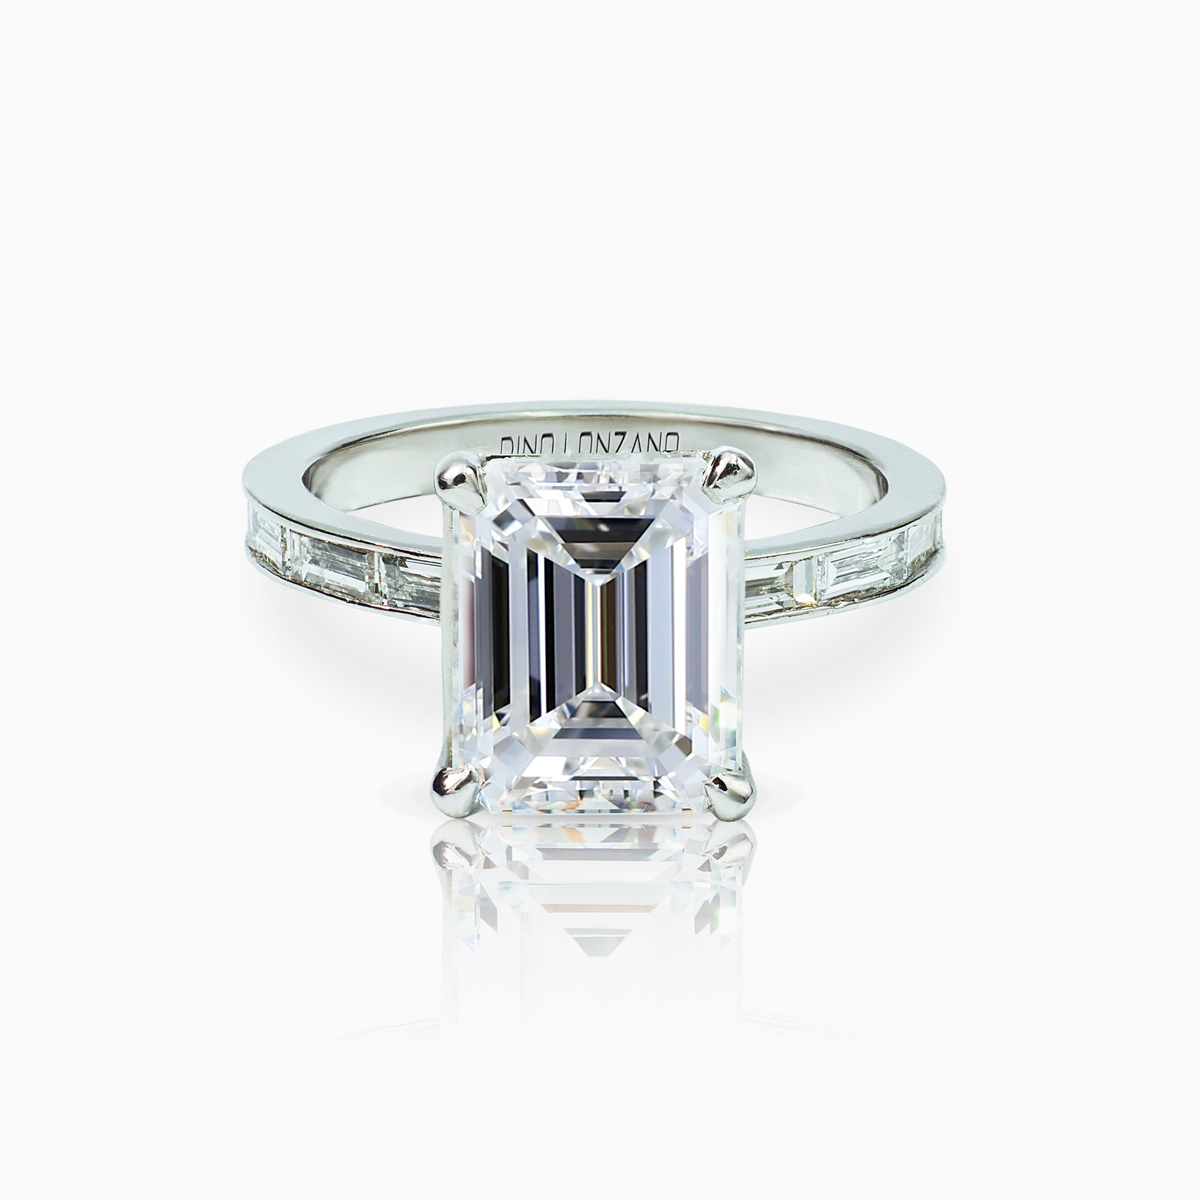 Channel Set Baguette Engagement Ring in Platinum